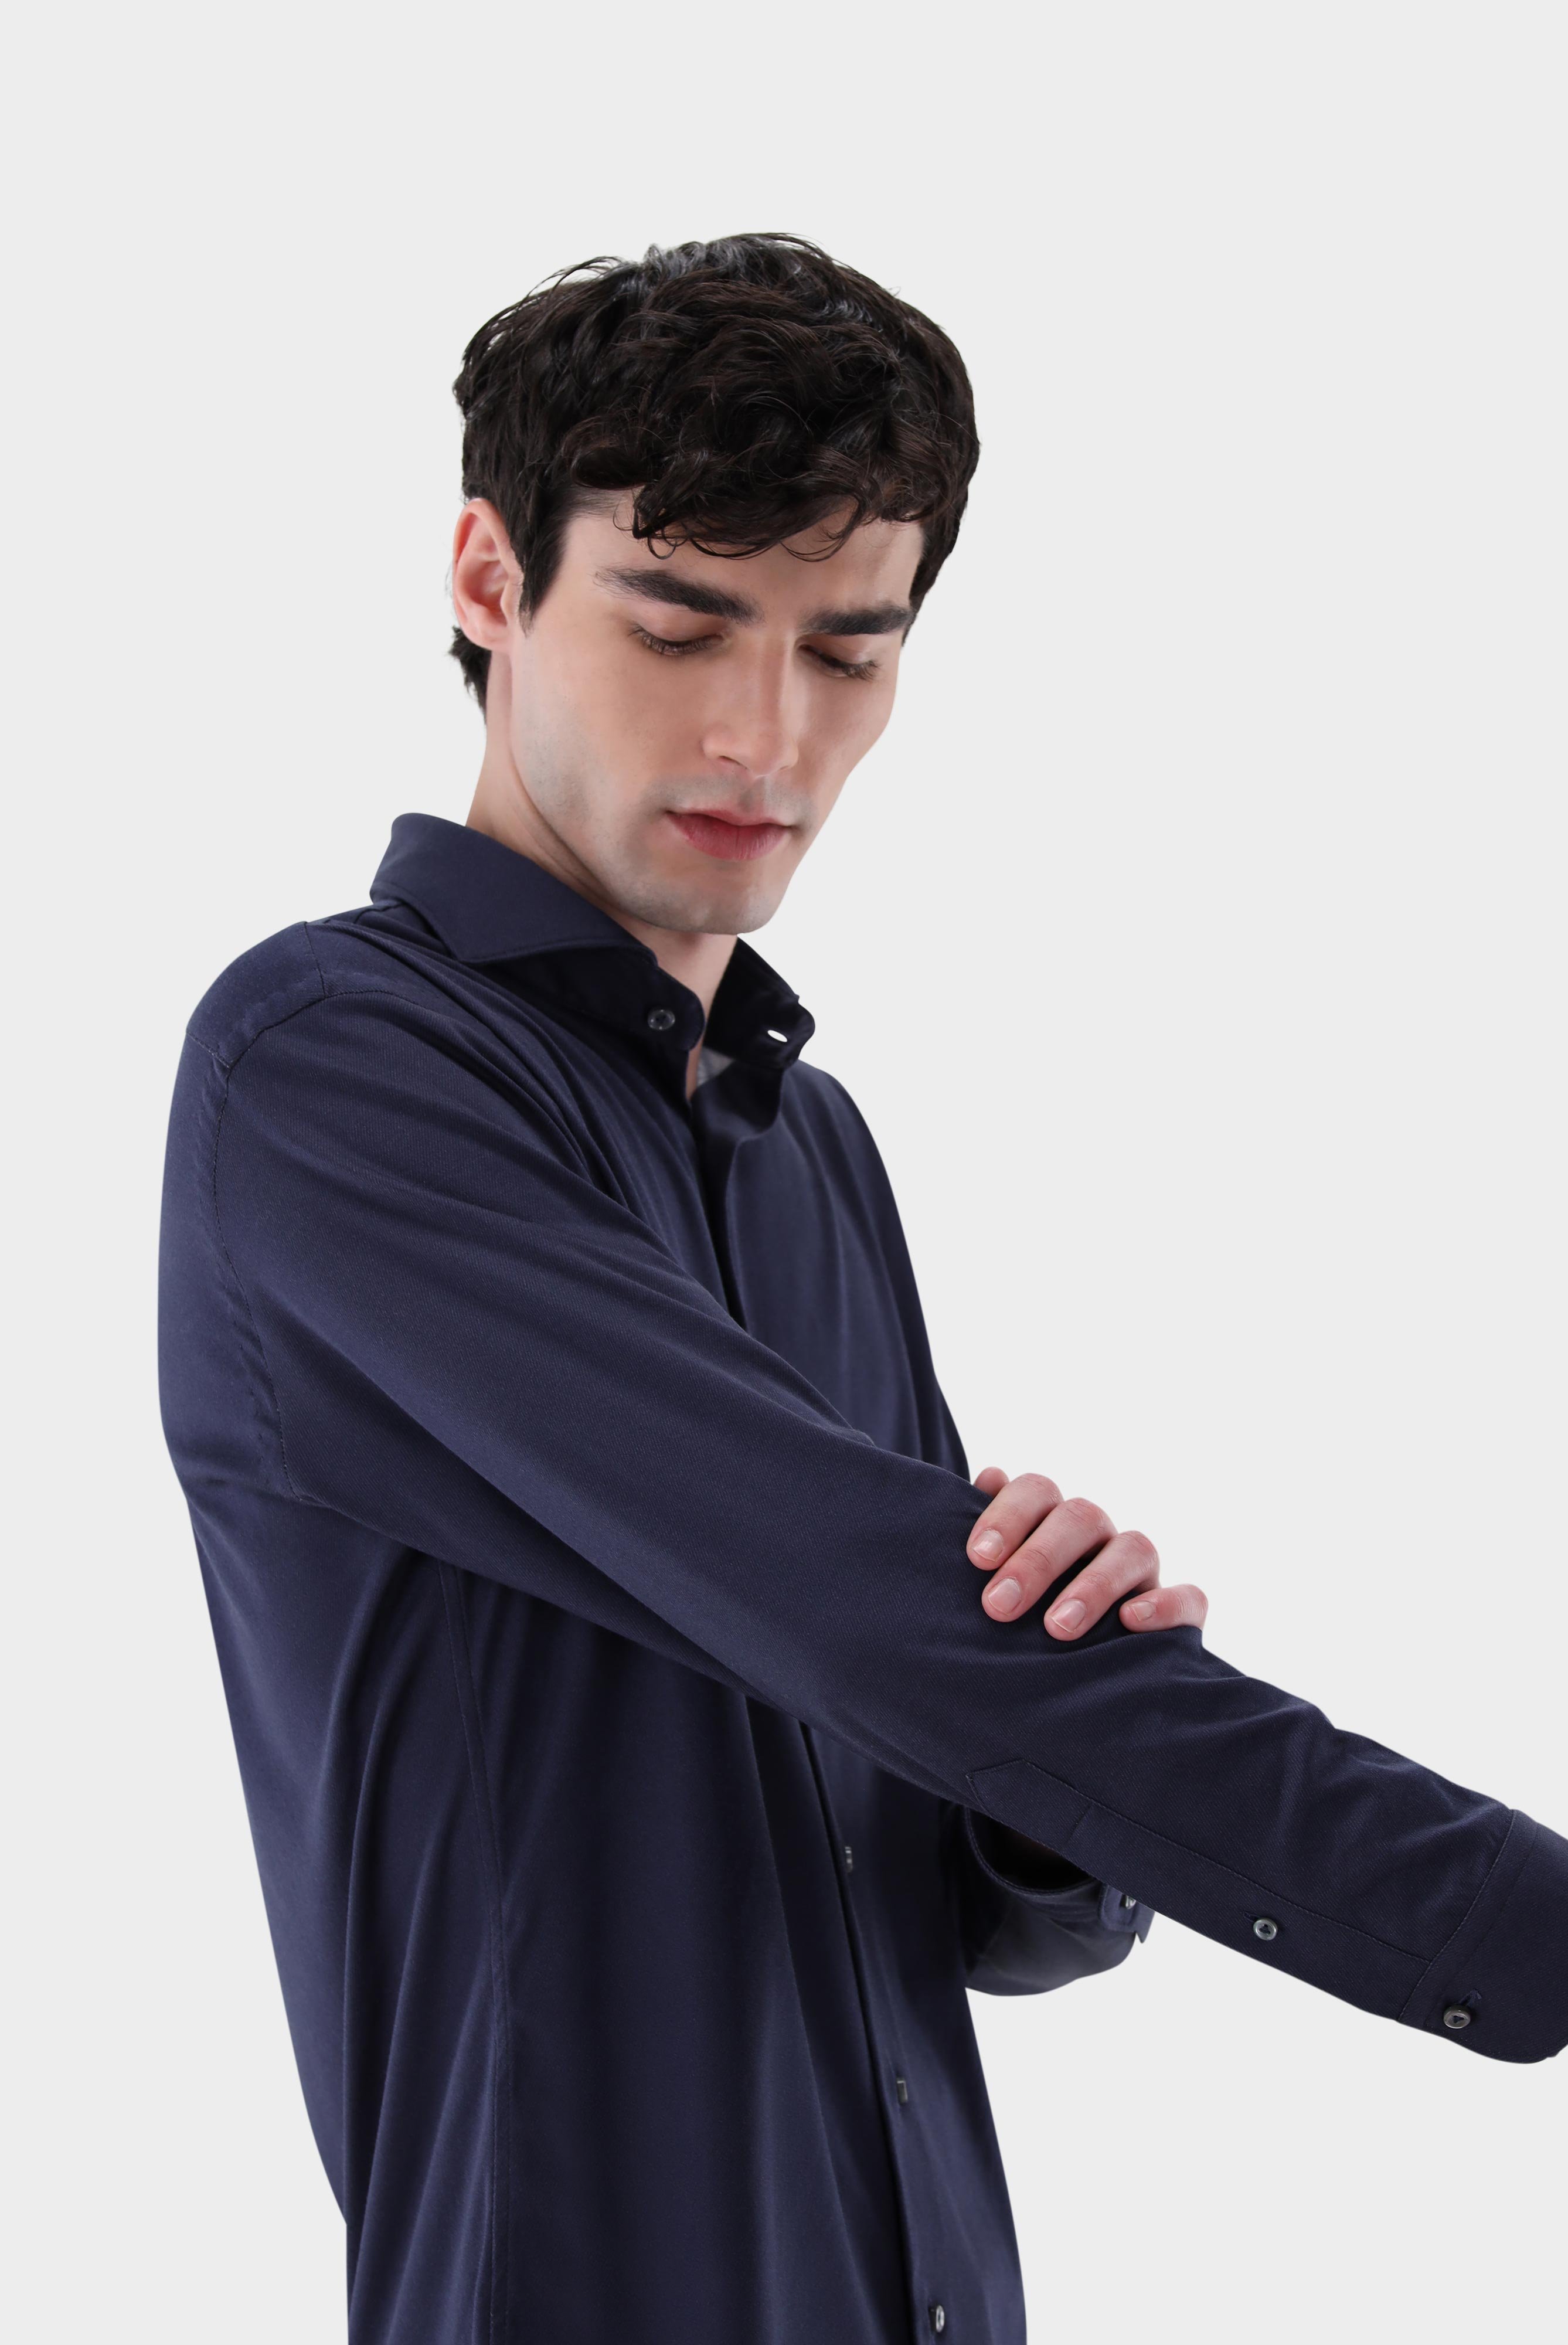 Casual Hemden+Jersey Hemd mit Twill Druck Tailor Fit+20.1683.UC.187749.690.XL